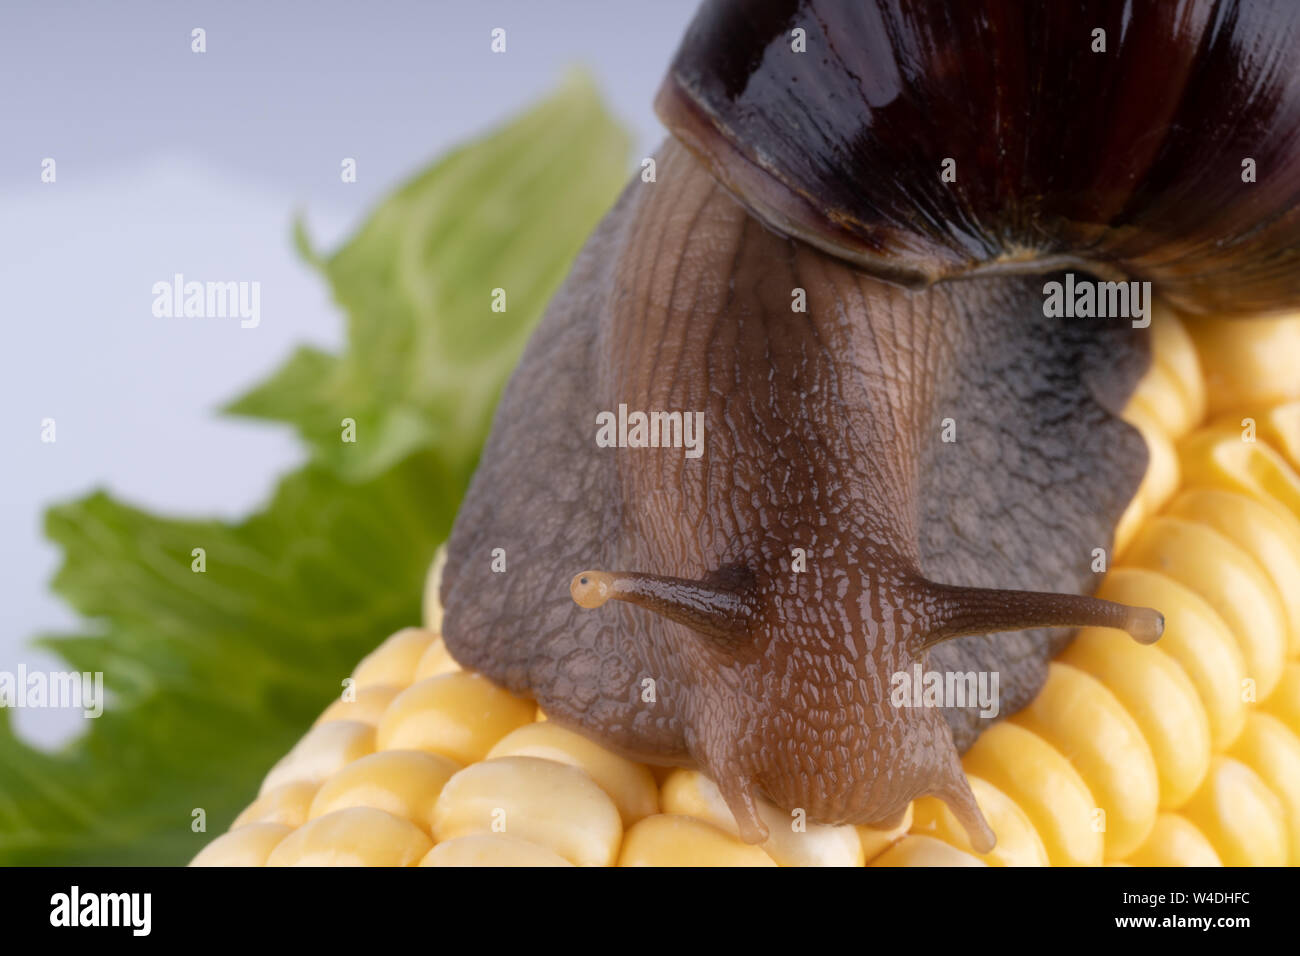 Giant African land snail Achatina fulica eating corn, macro Stock Photo